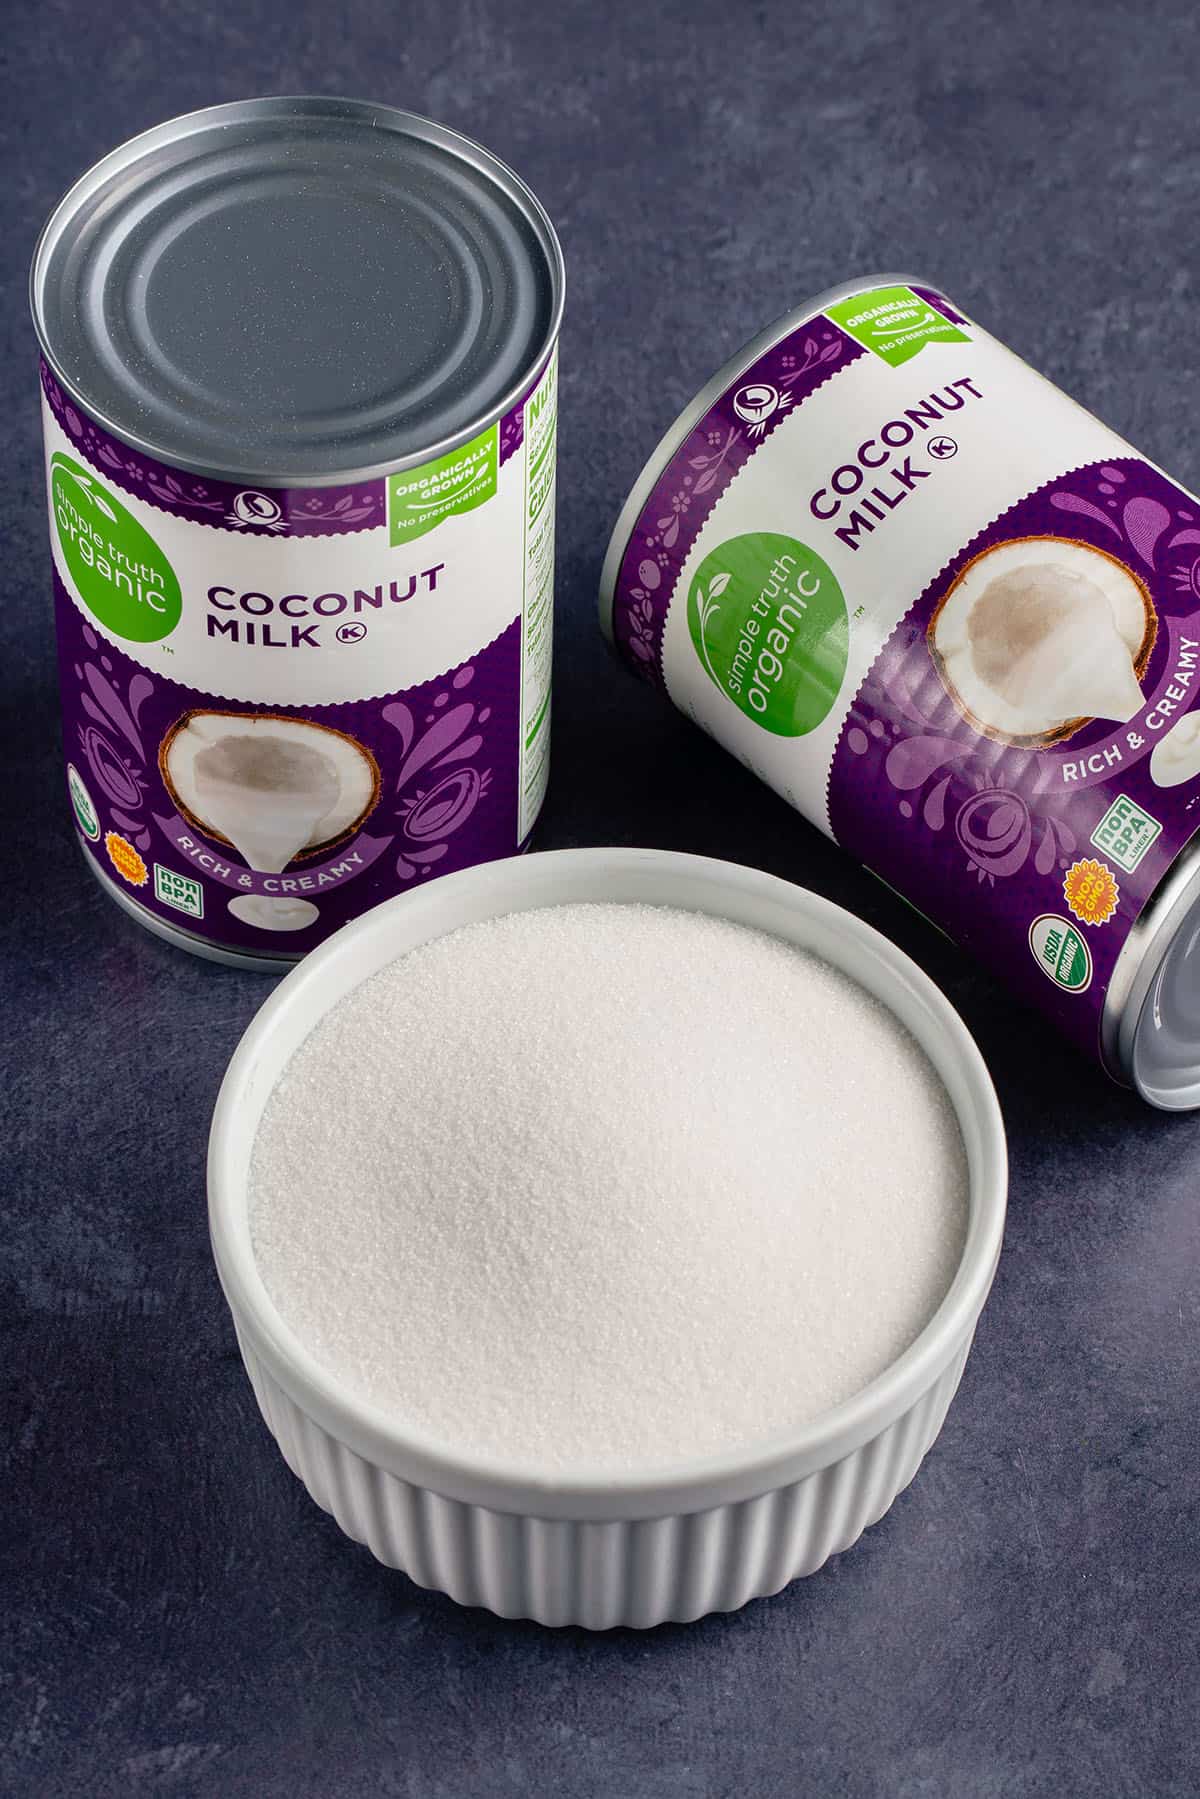 coconut milk and sugar - ingredients for vegan condensed milk